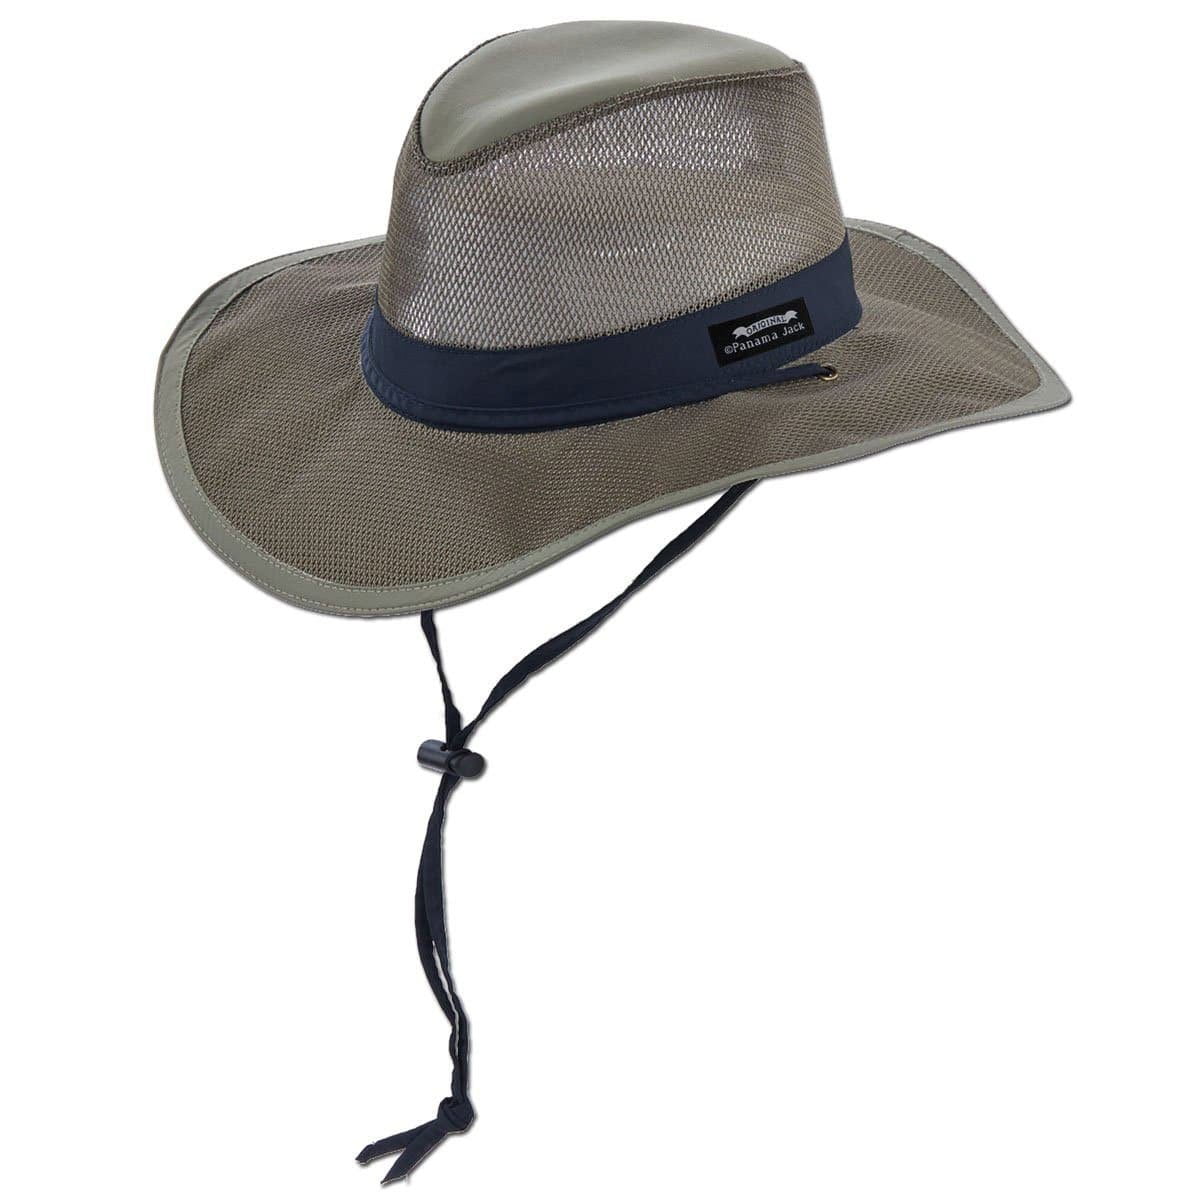 Panama Jack Women's Bucket Hat - Palm Print Underbrim, Packable,  Adjustable, UPF (SPF) 50+ UVA/UVB Sun Protection, 3 Brim (Khaki)